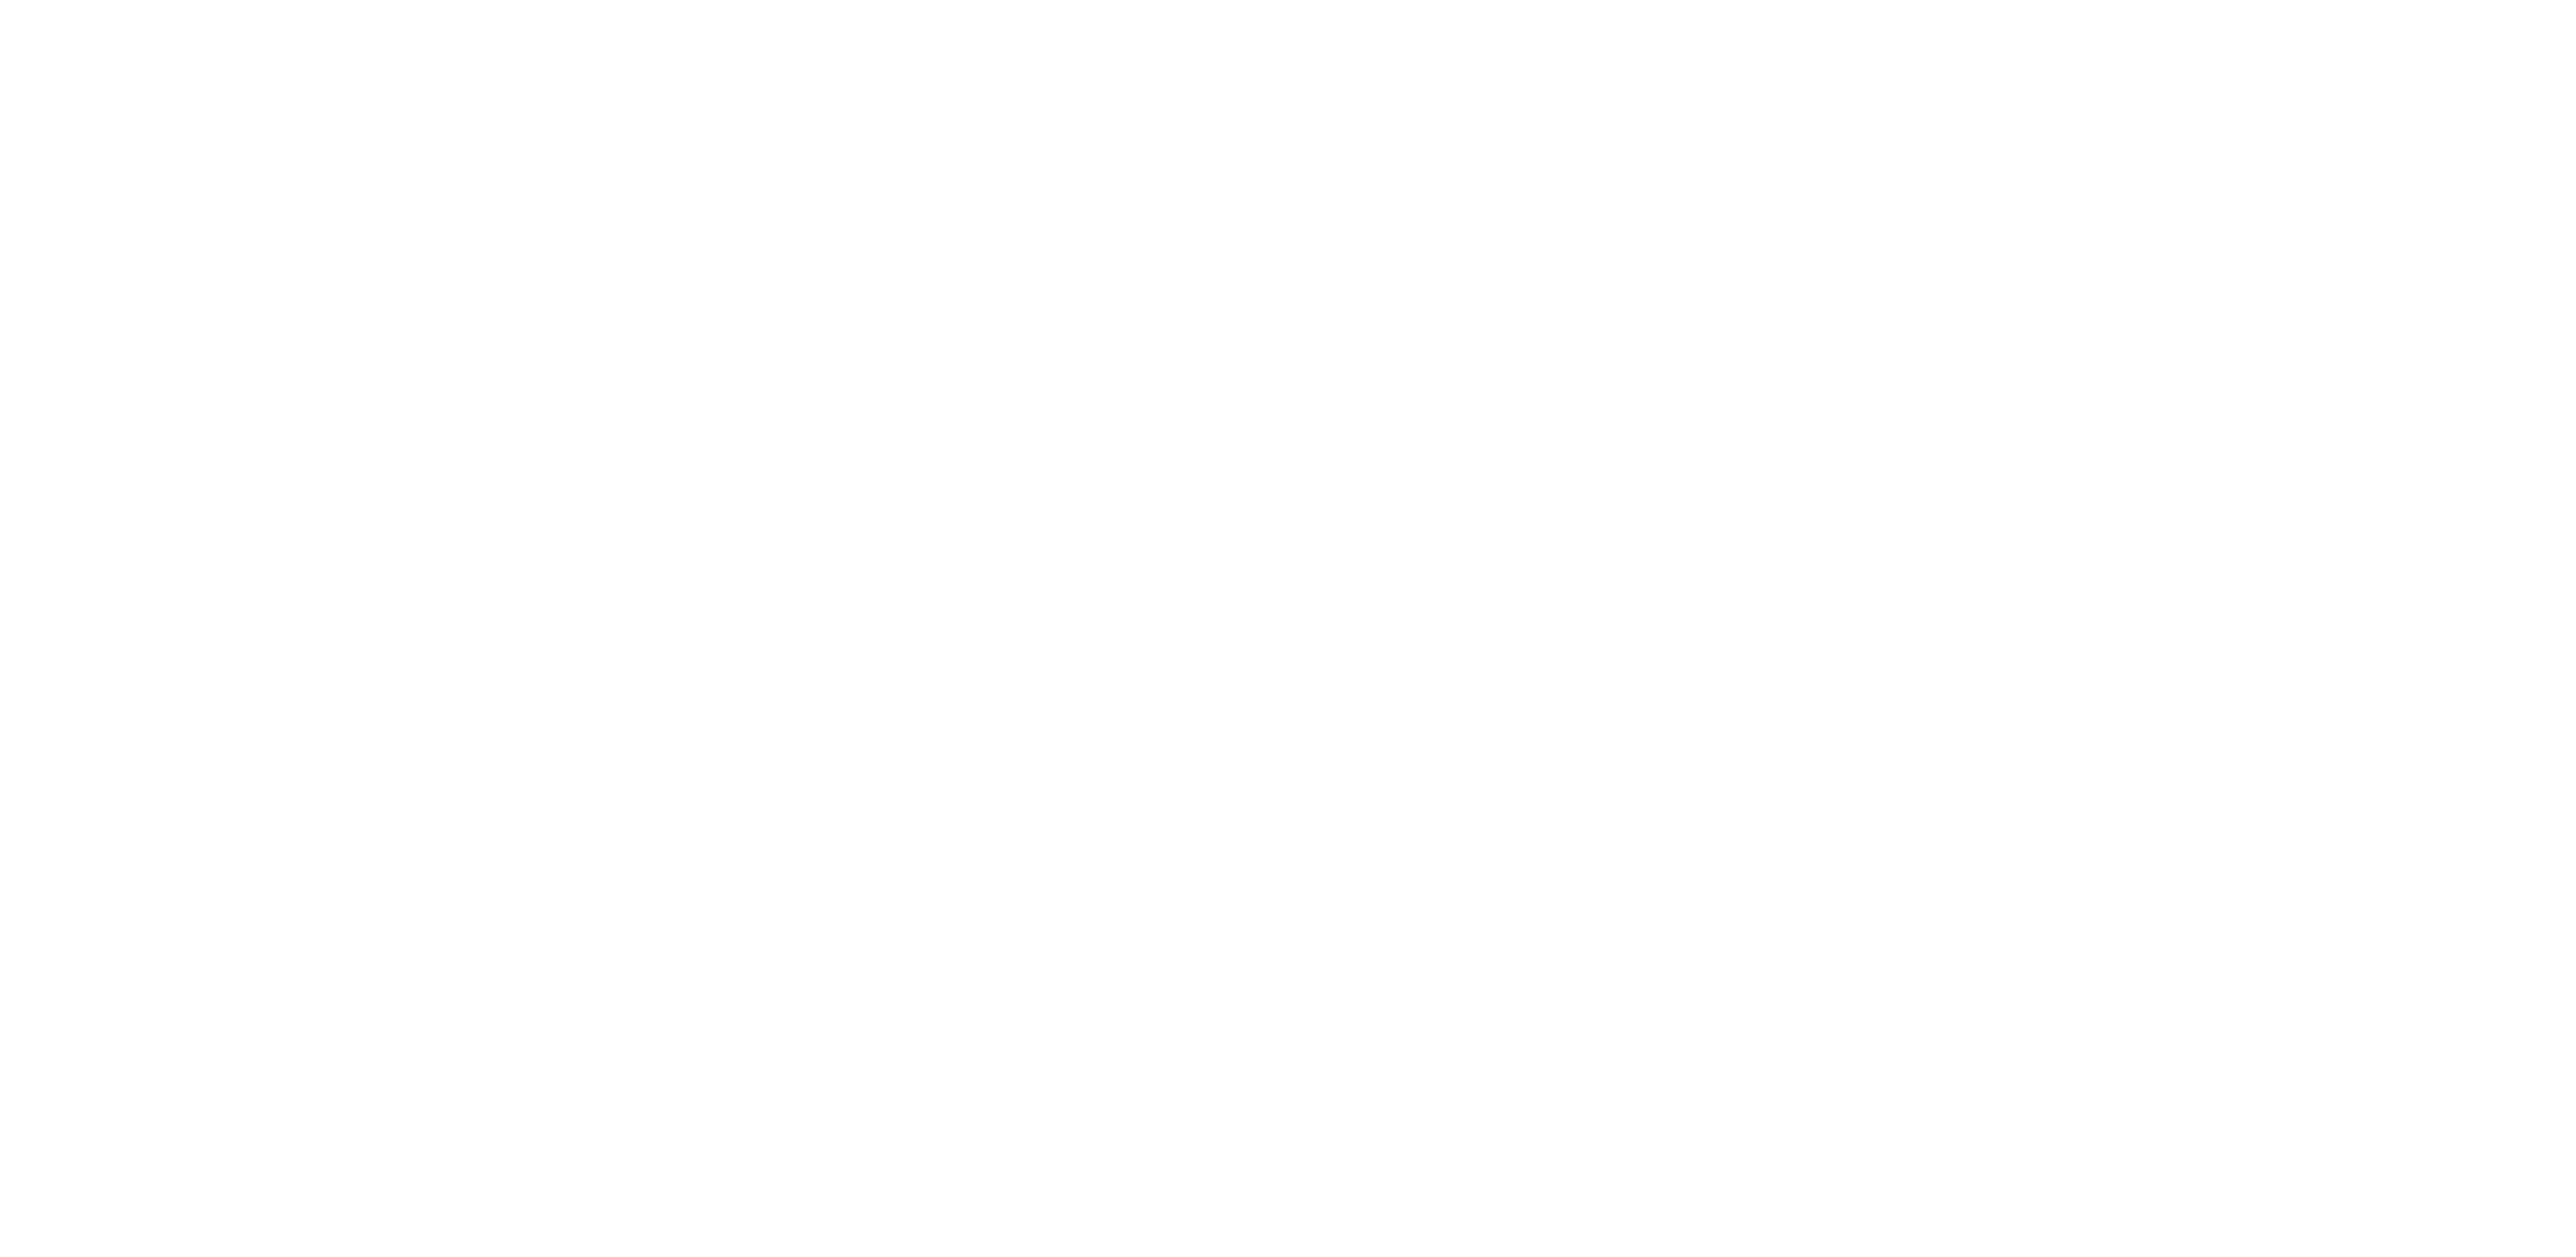 Home - Lee's Discount Liquor